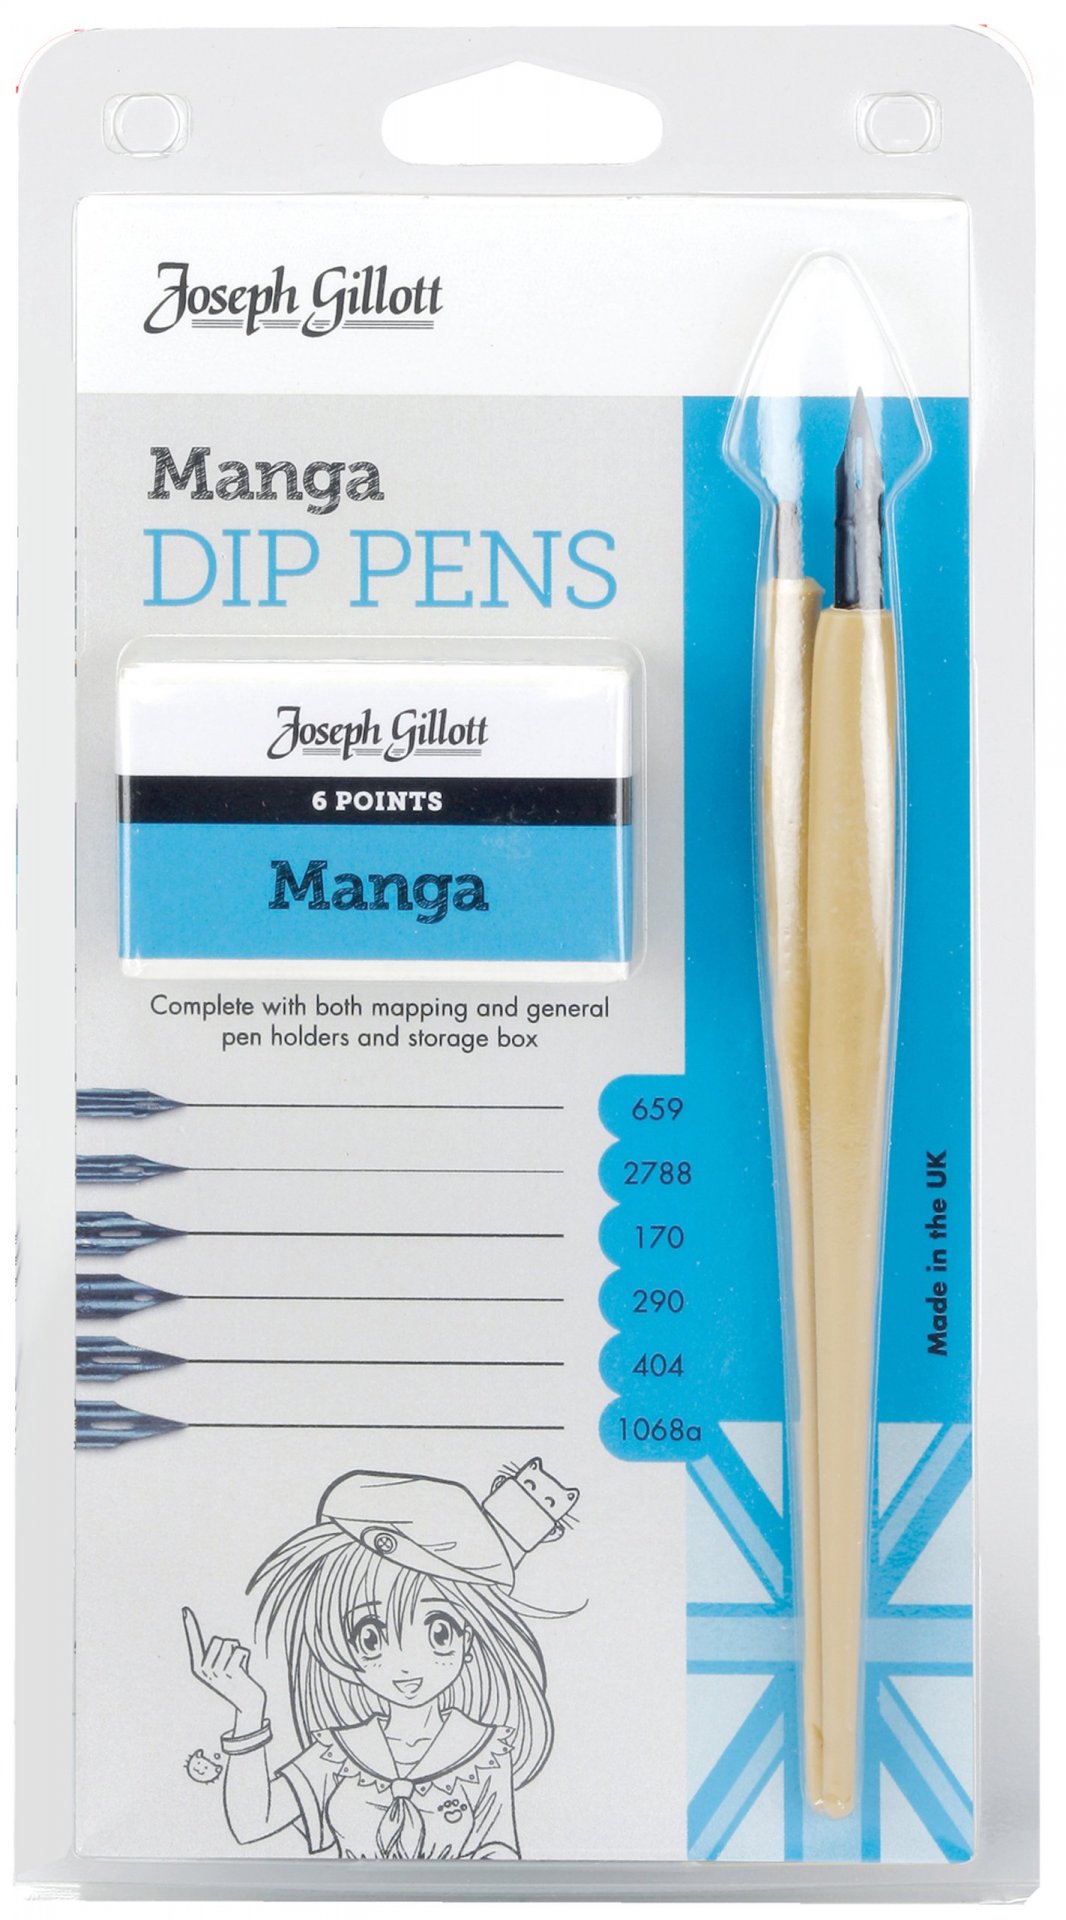 Manga Cartoon Drawing Kit with Pen Holders & Nibs UK